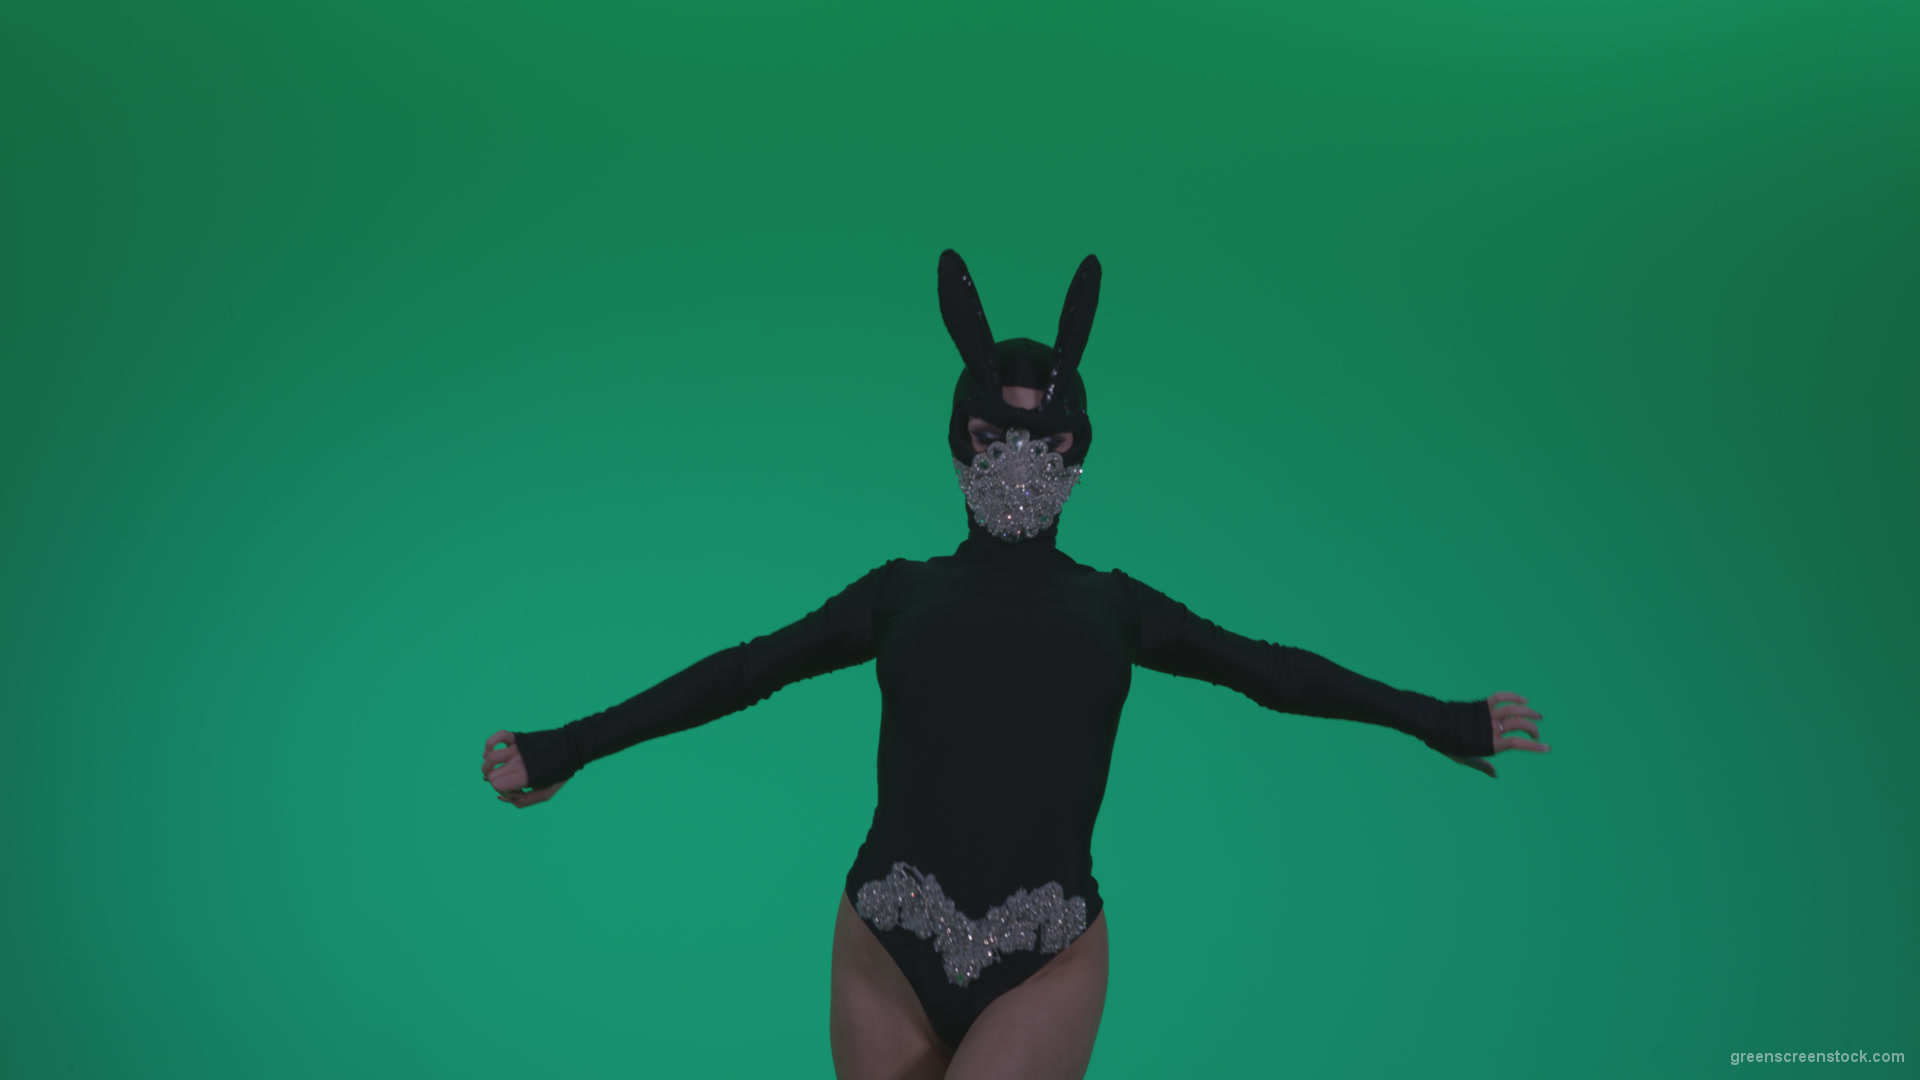 Go-go-Dancer-Black-Rabbit-u12-Green-Screen-Video-Footage_007 Green Screen Stock